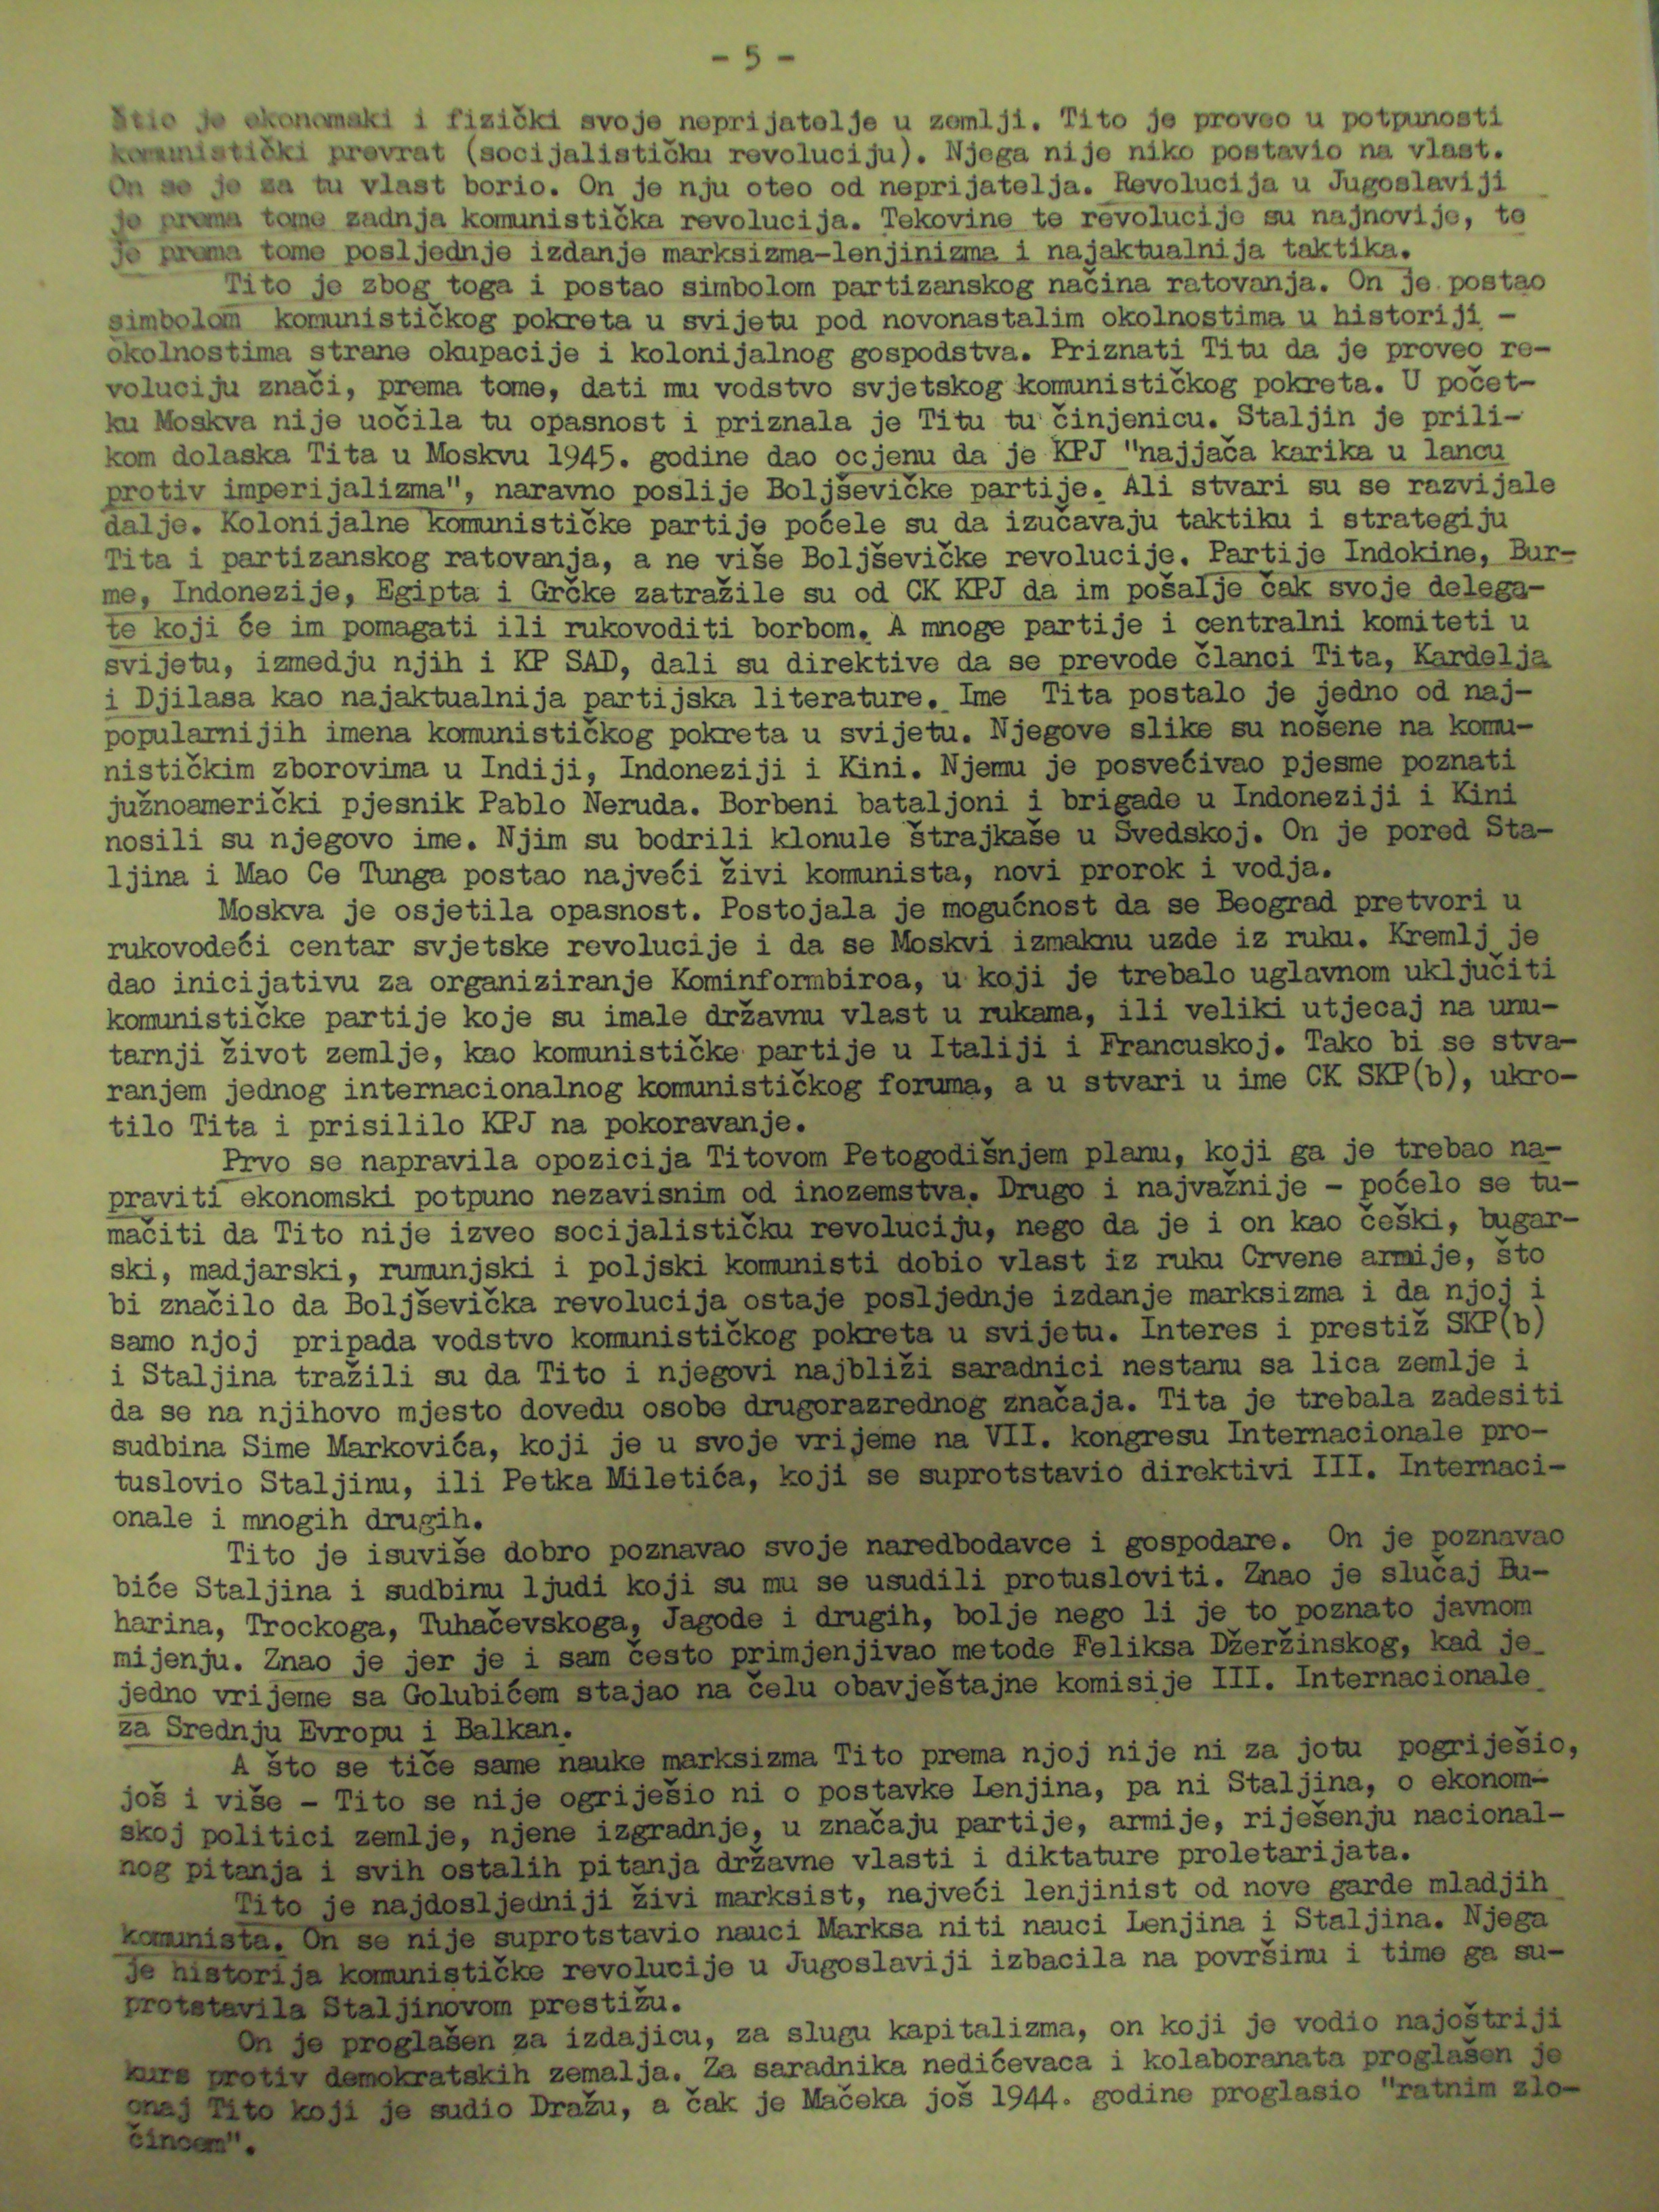 Juretić, Augustin. “Suština sukoba Kominform – Tito” [The essence of the Cominform conflict – Tito] (Hrvatski dom), 1950. Article 